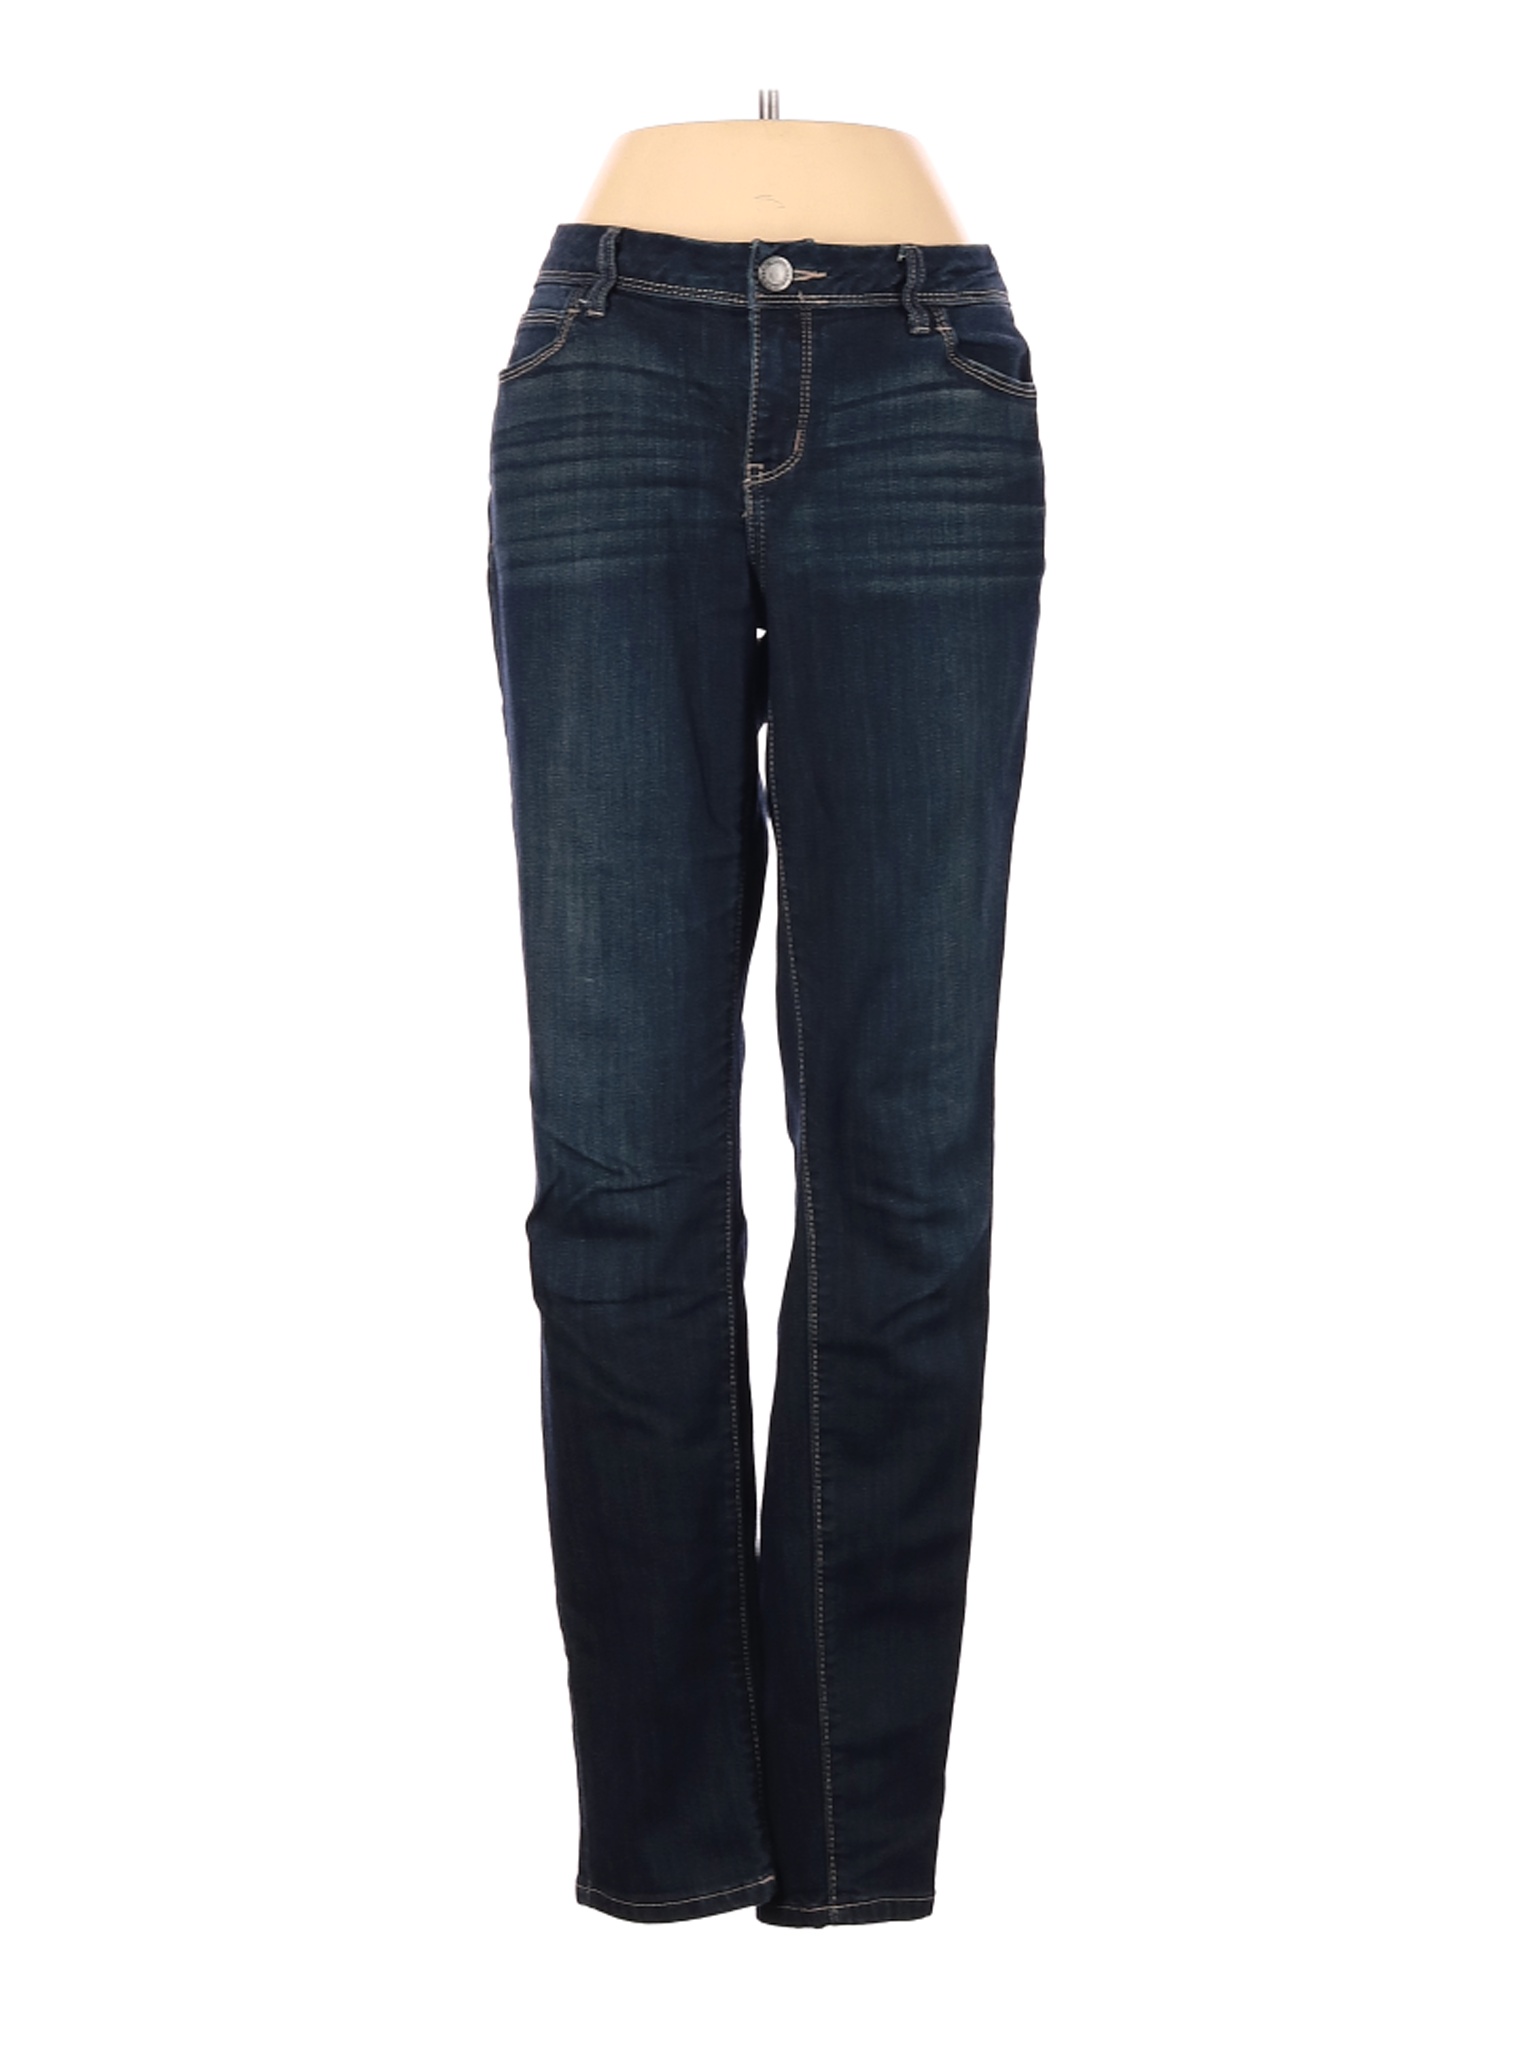 Simply Vera Vera Wang Women Blue Jeans 4 | eBay